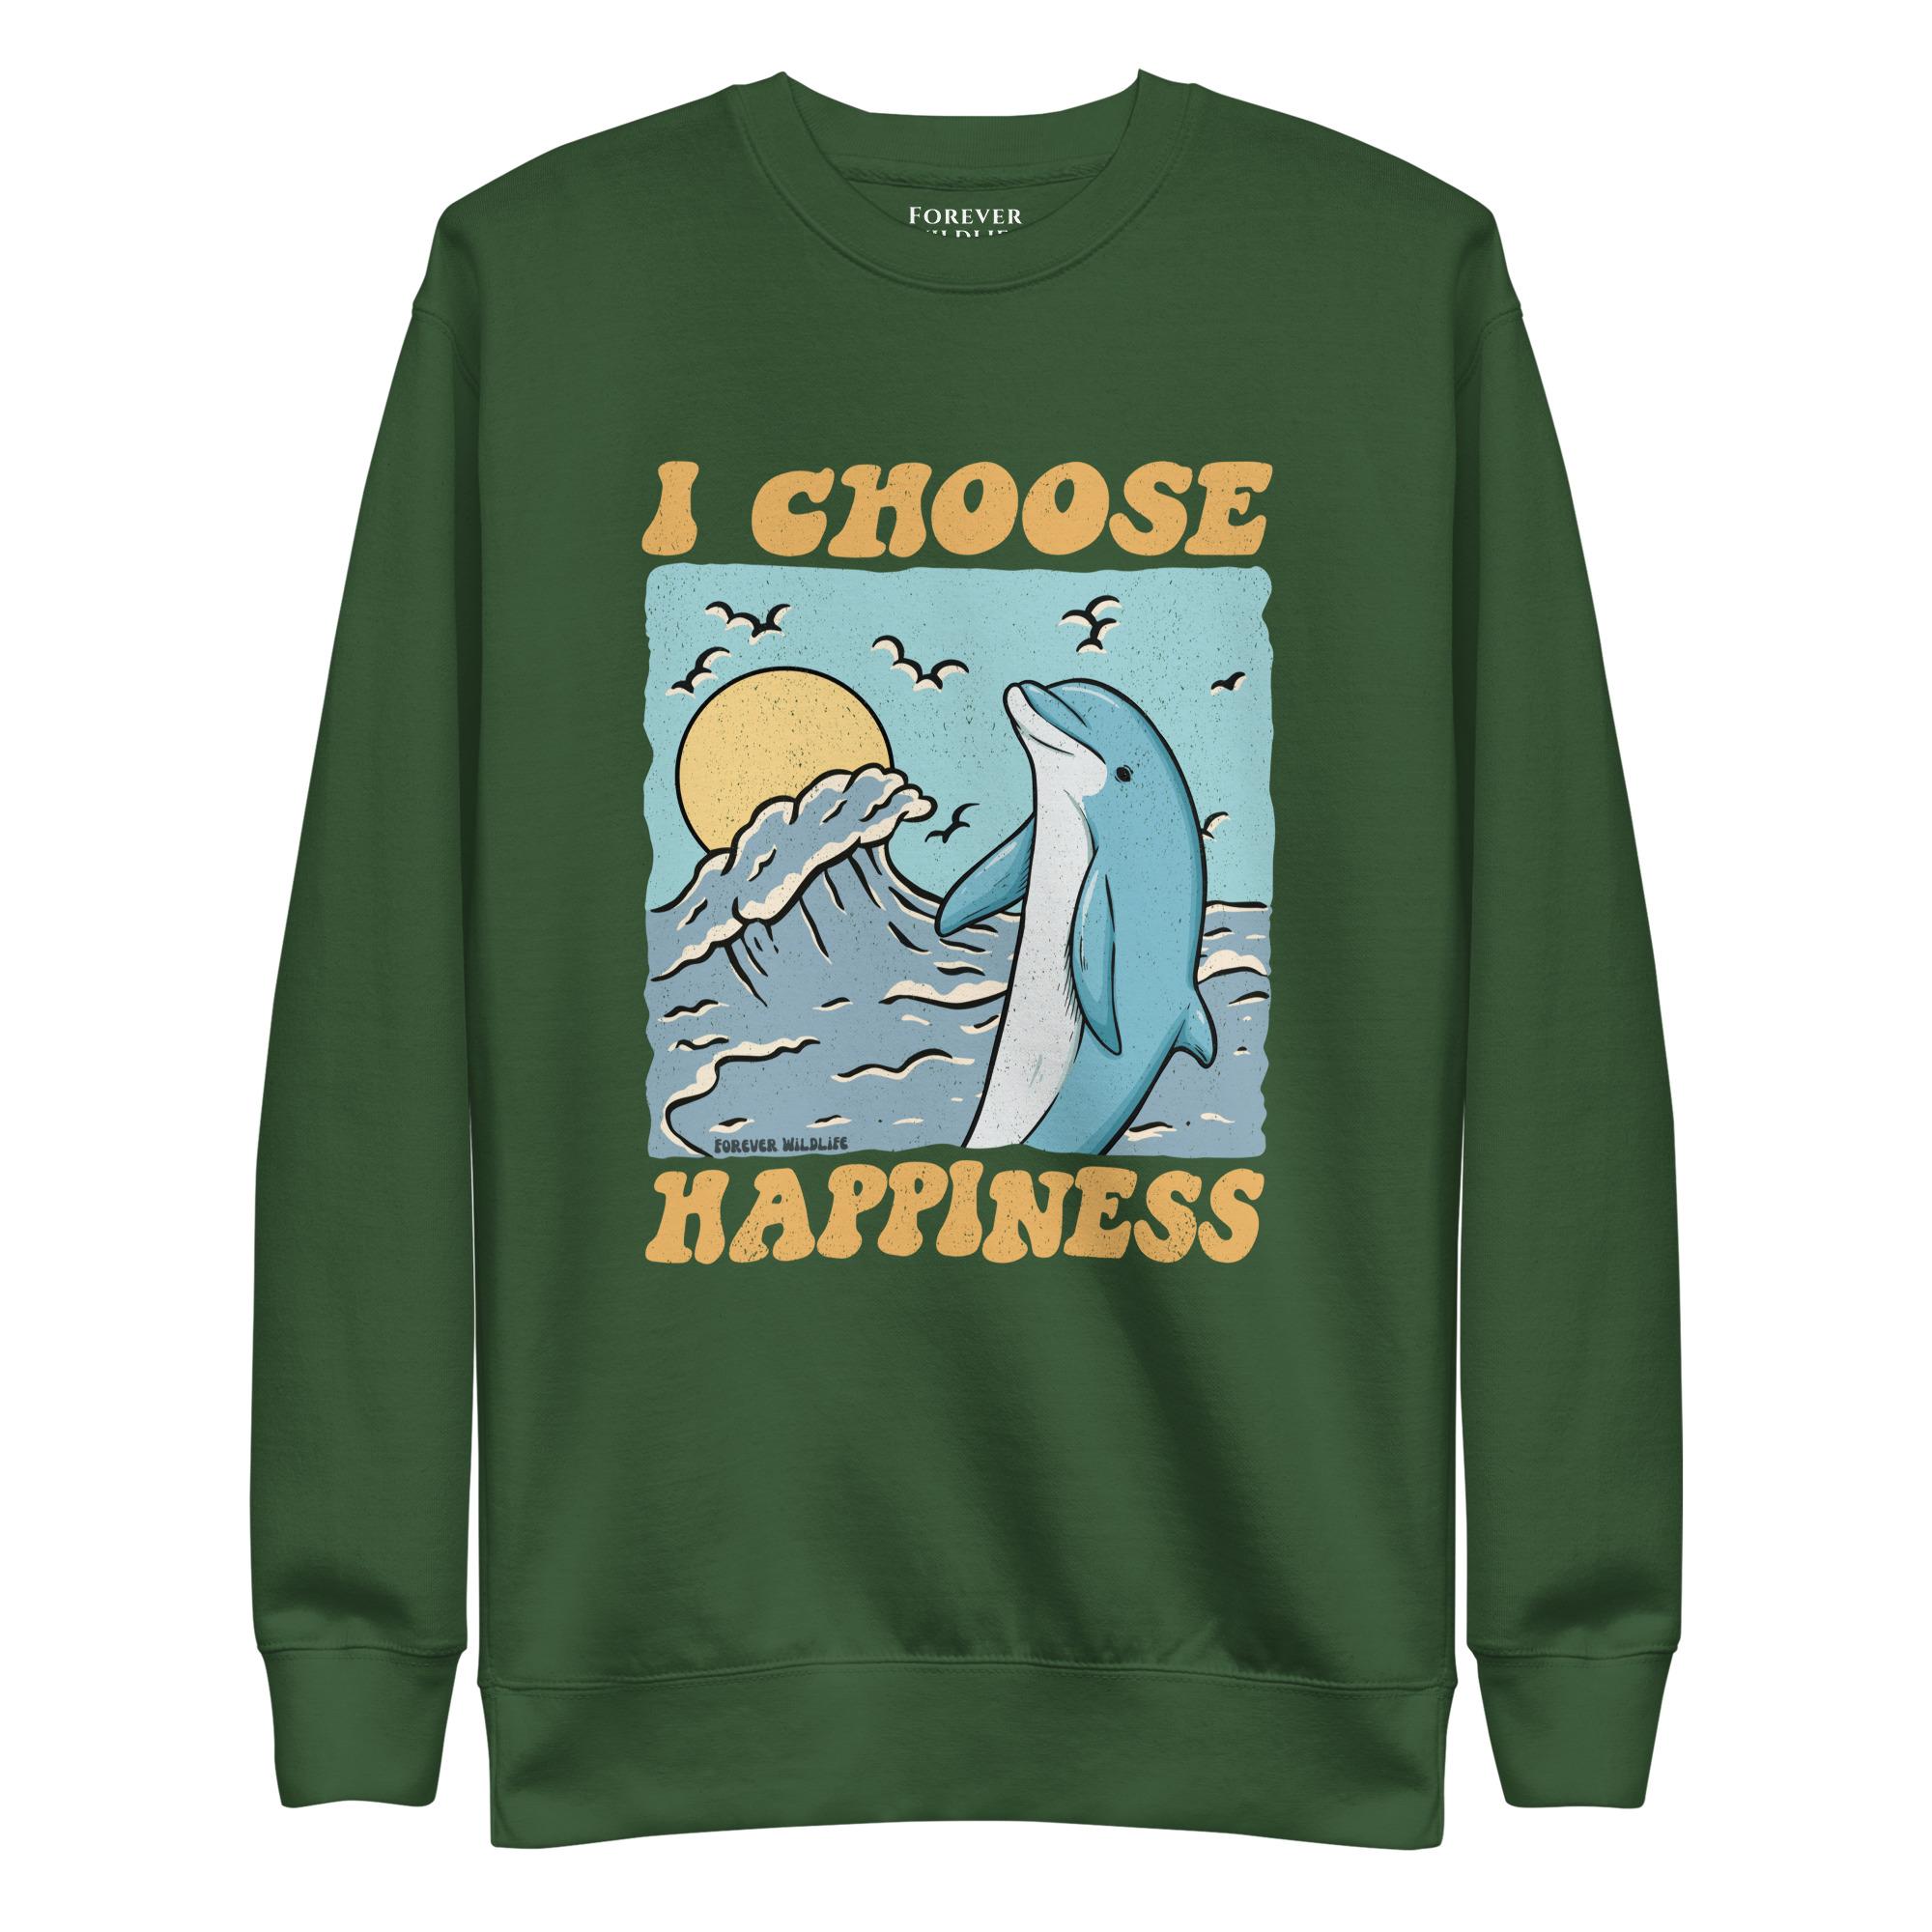 Dolphin Sweatshirt in Green-Premium Wildlife Animal Inspiration Sweatshirt Design with 'I Choose Happiness' text, part of Wildlife Sweatshirts & Clothing from Forever Wildlife.